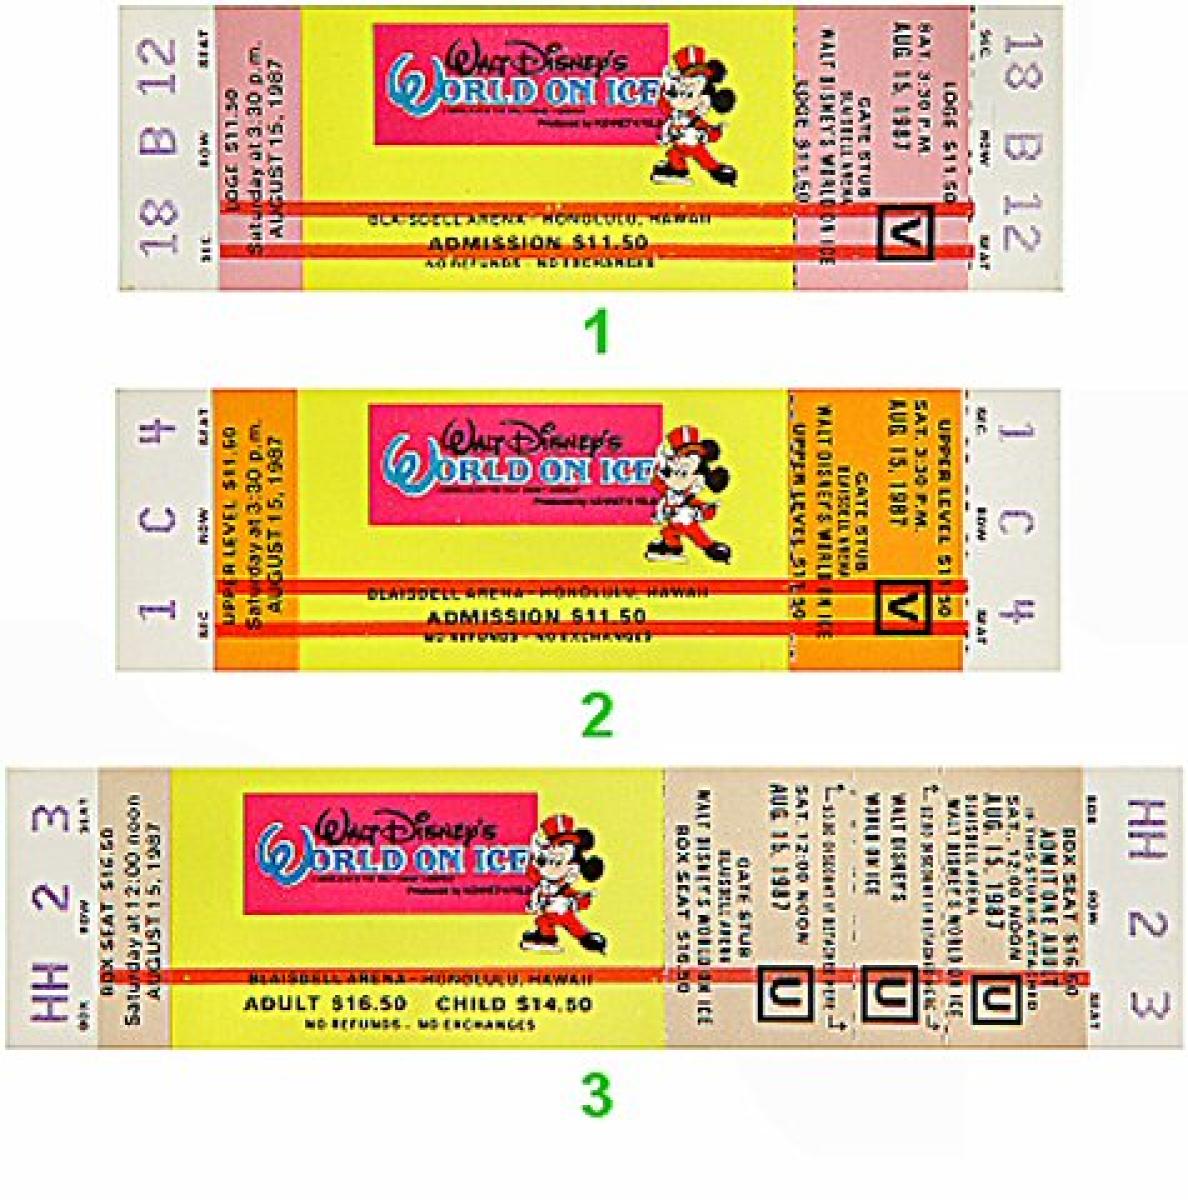 walt-disney-s-world-on-ice-vintage-concert-vintage-ticket-from